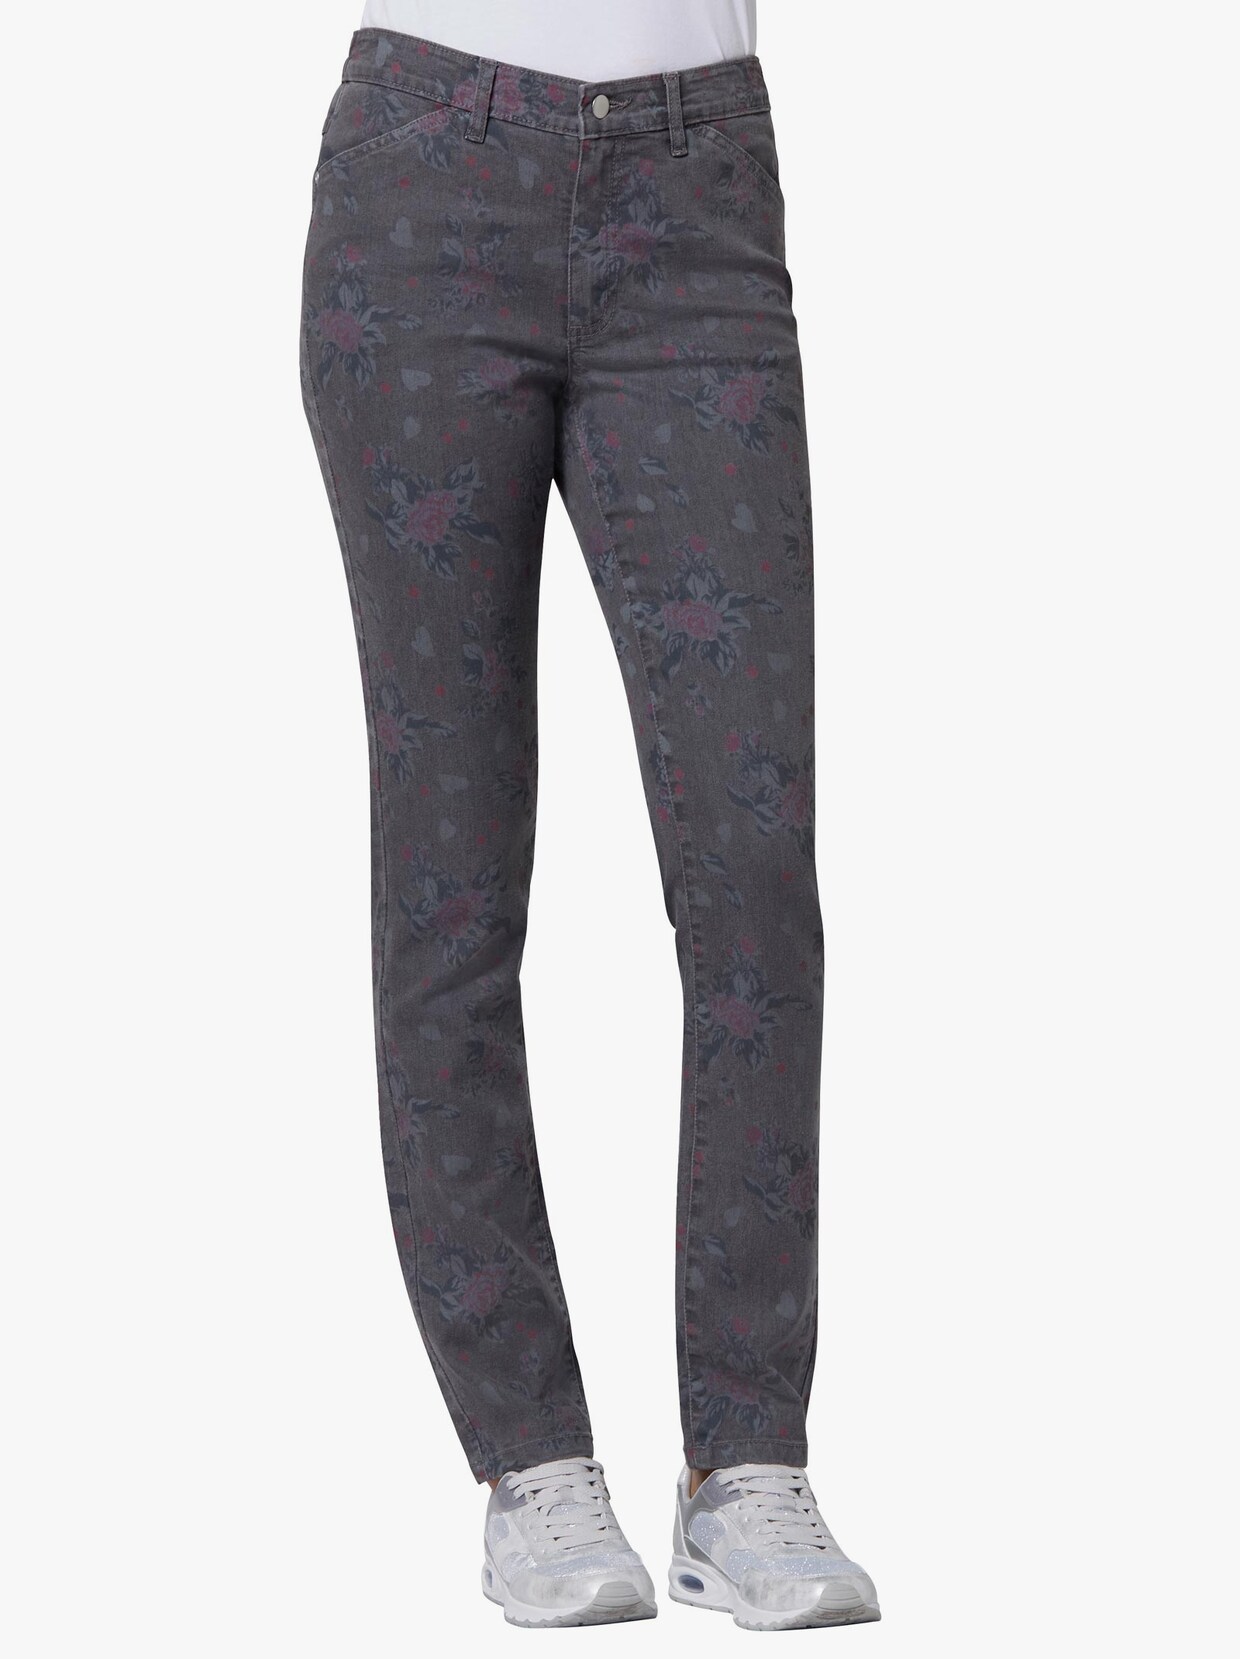 Jeans - grey/denim bedrukt